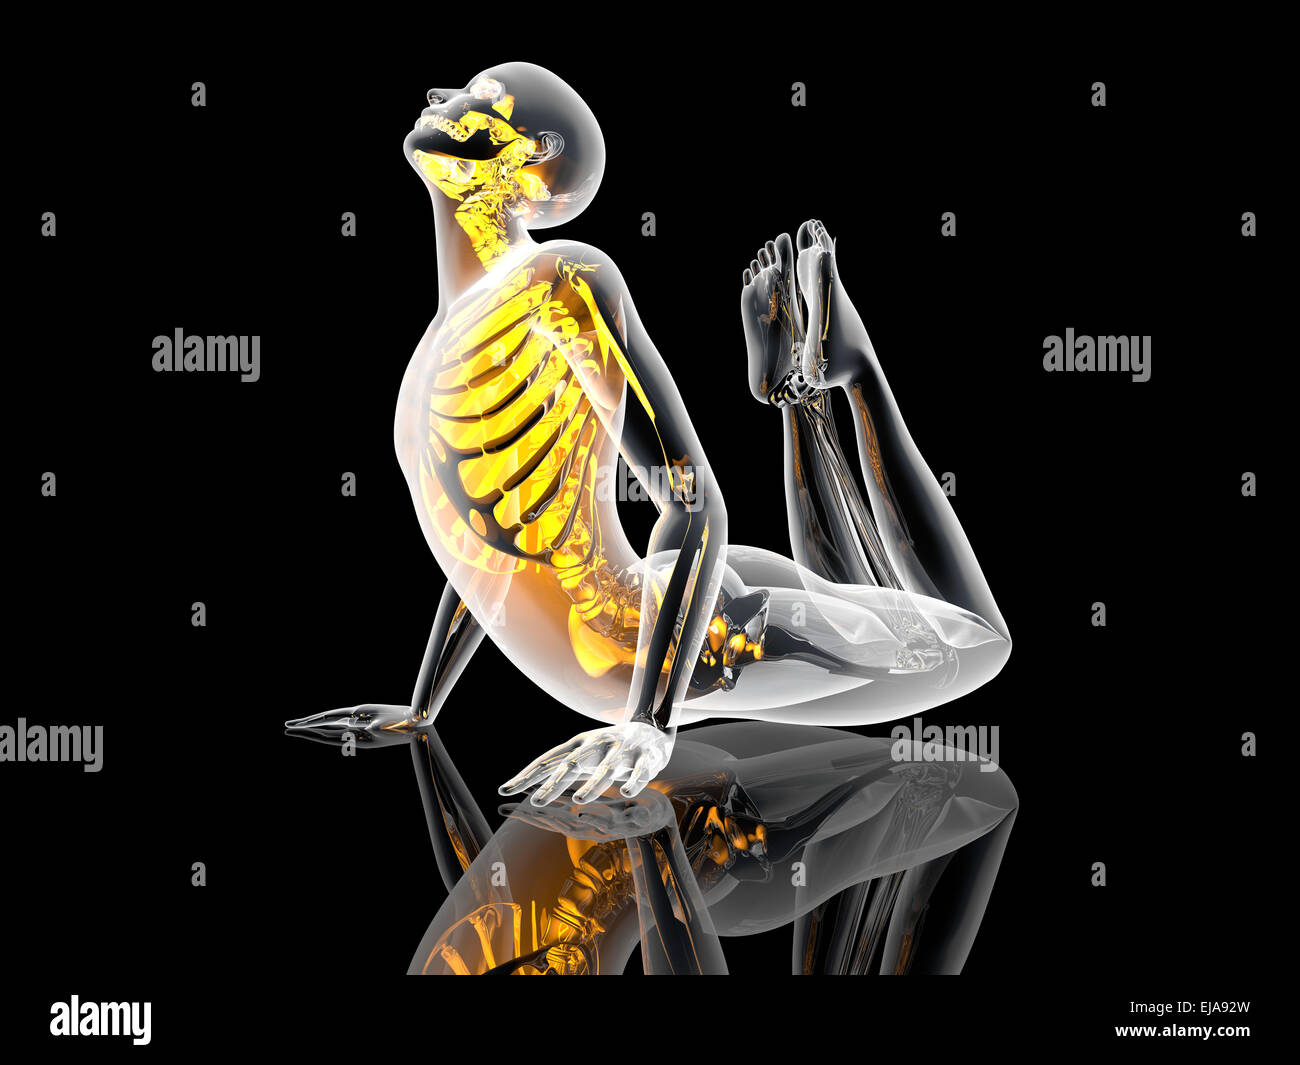 Man in tree yoga pose, illustration Stock Photo - Alamy